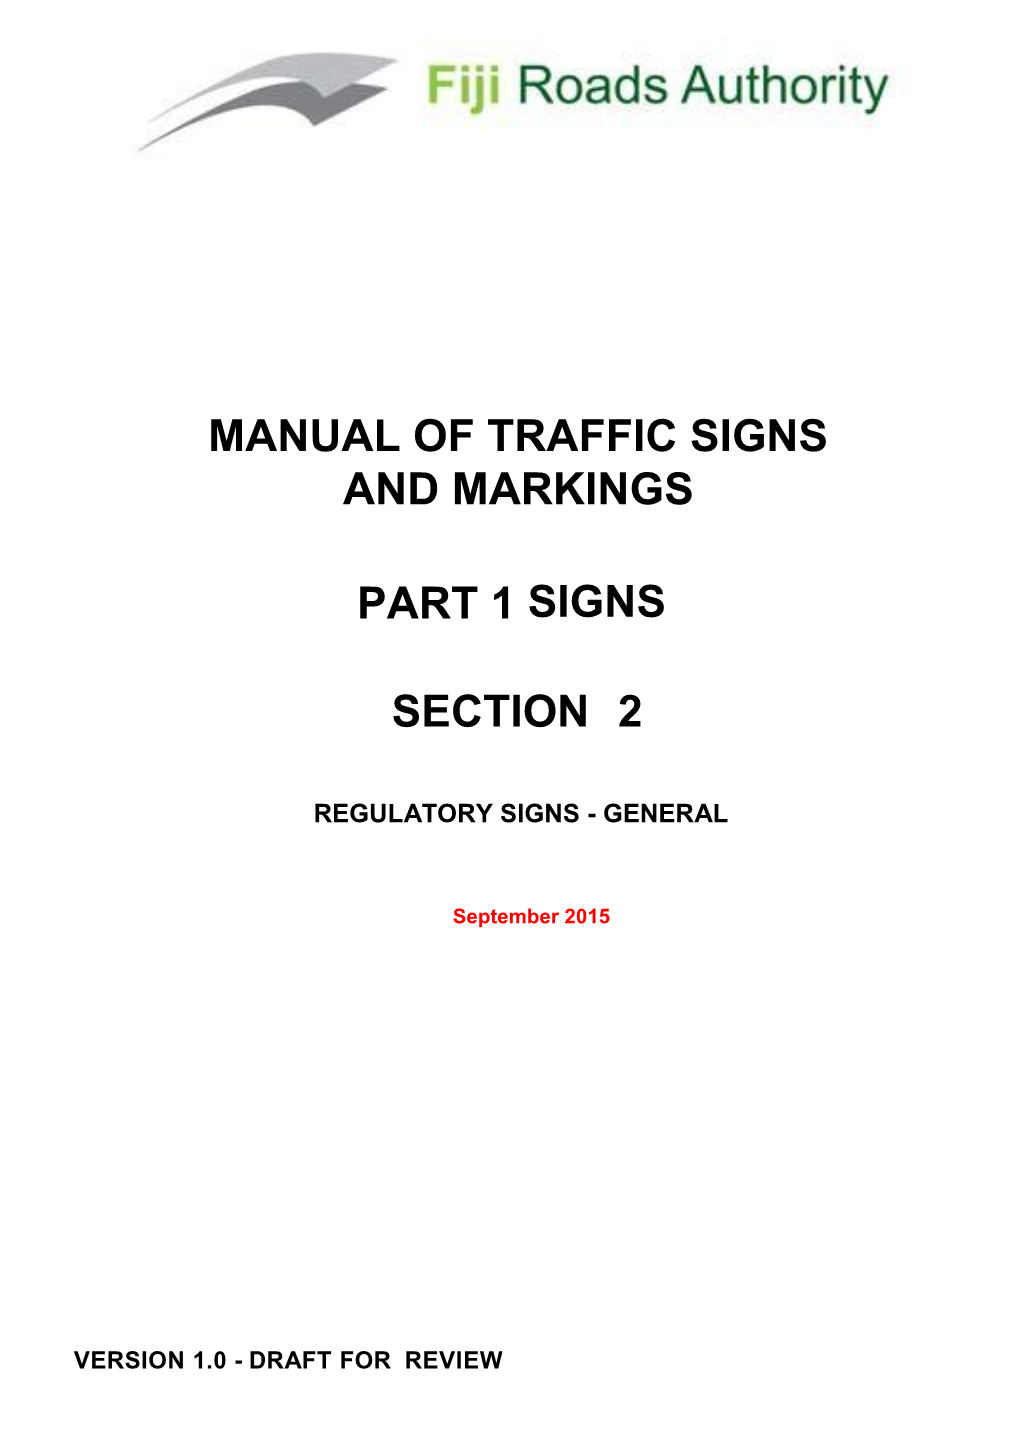 MOTSAM Part I: Section 02 Regulatory Signs